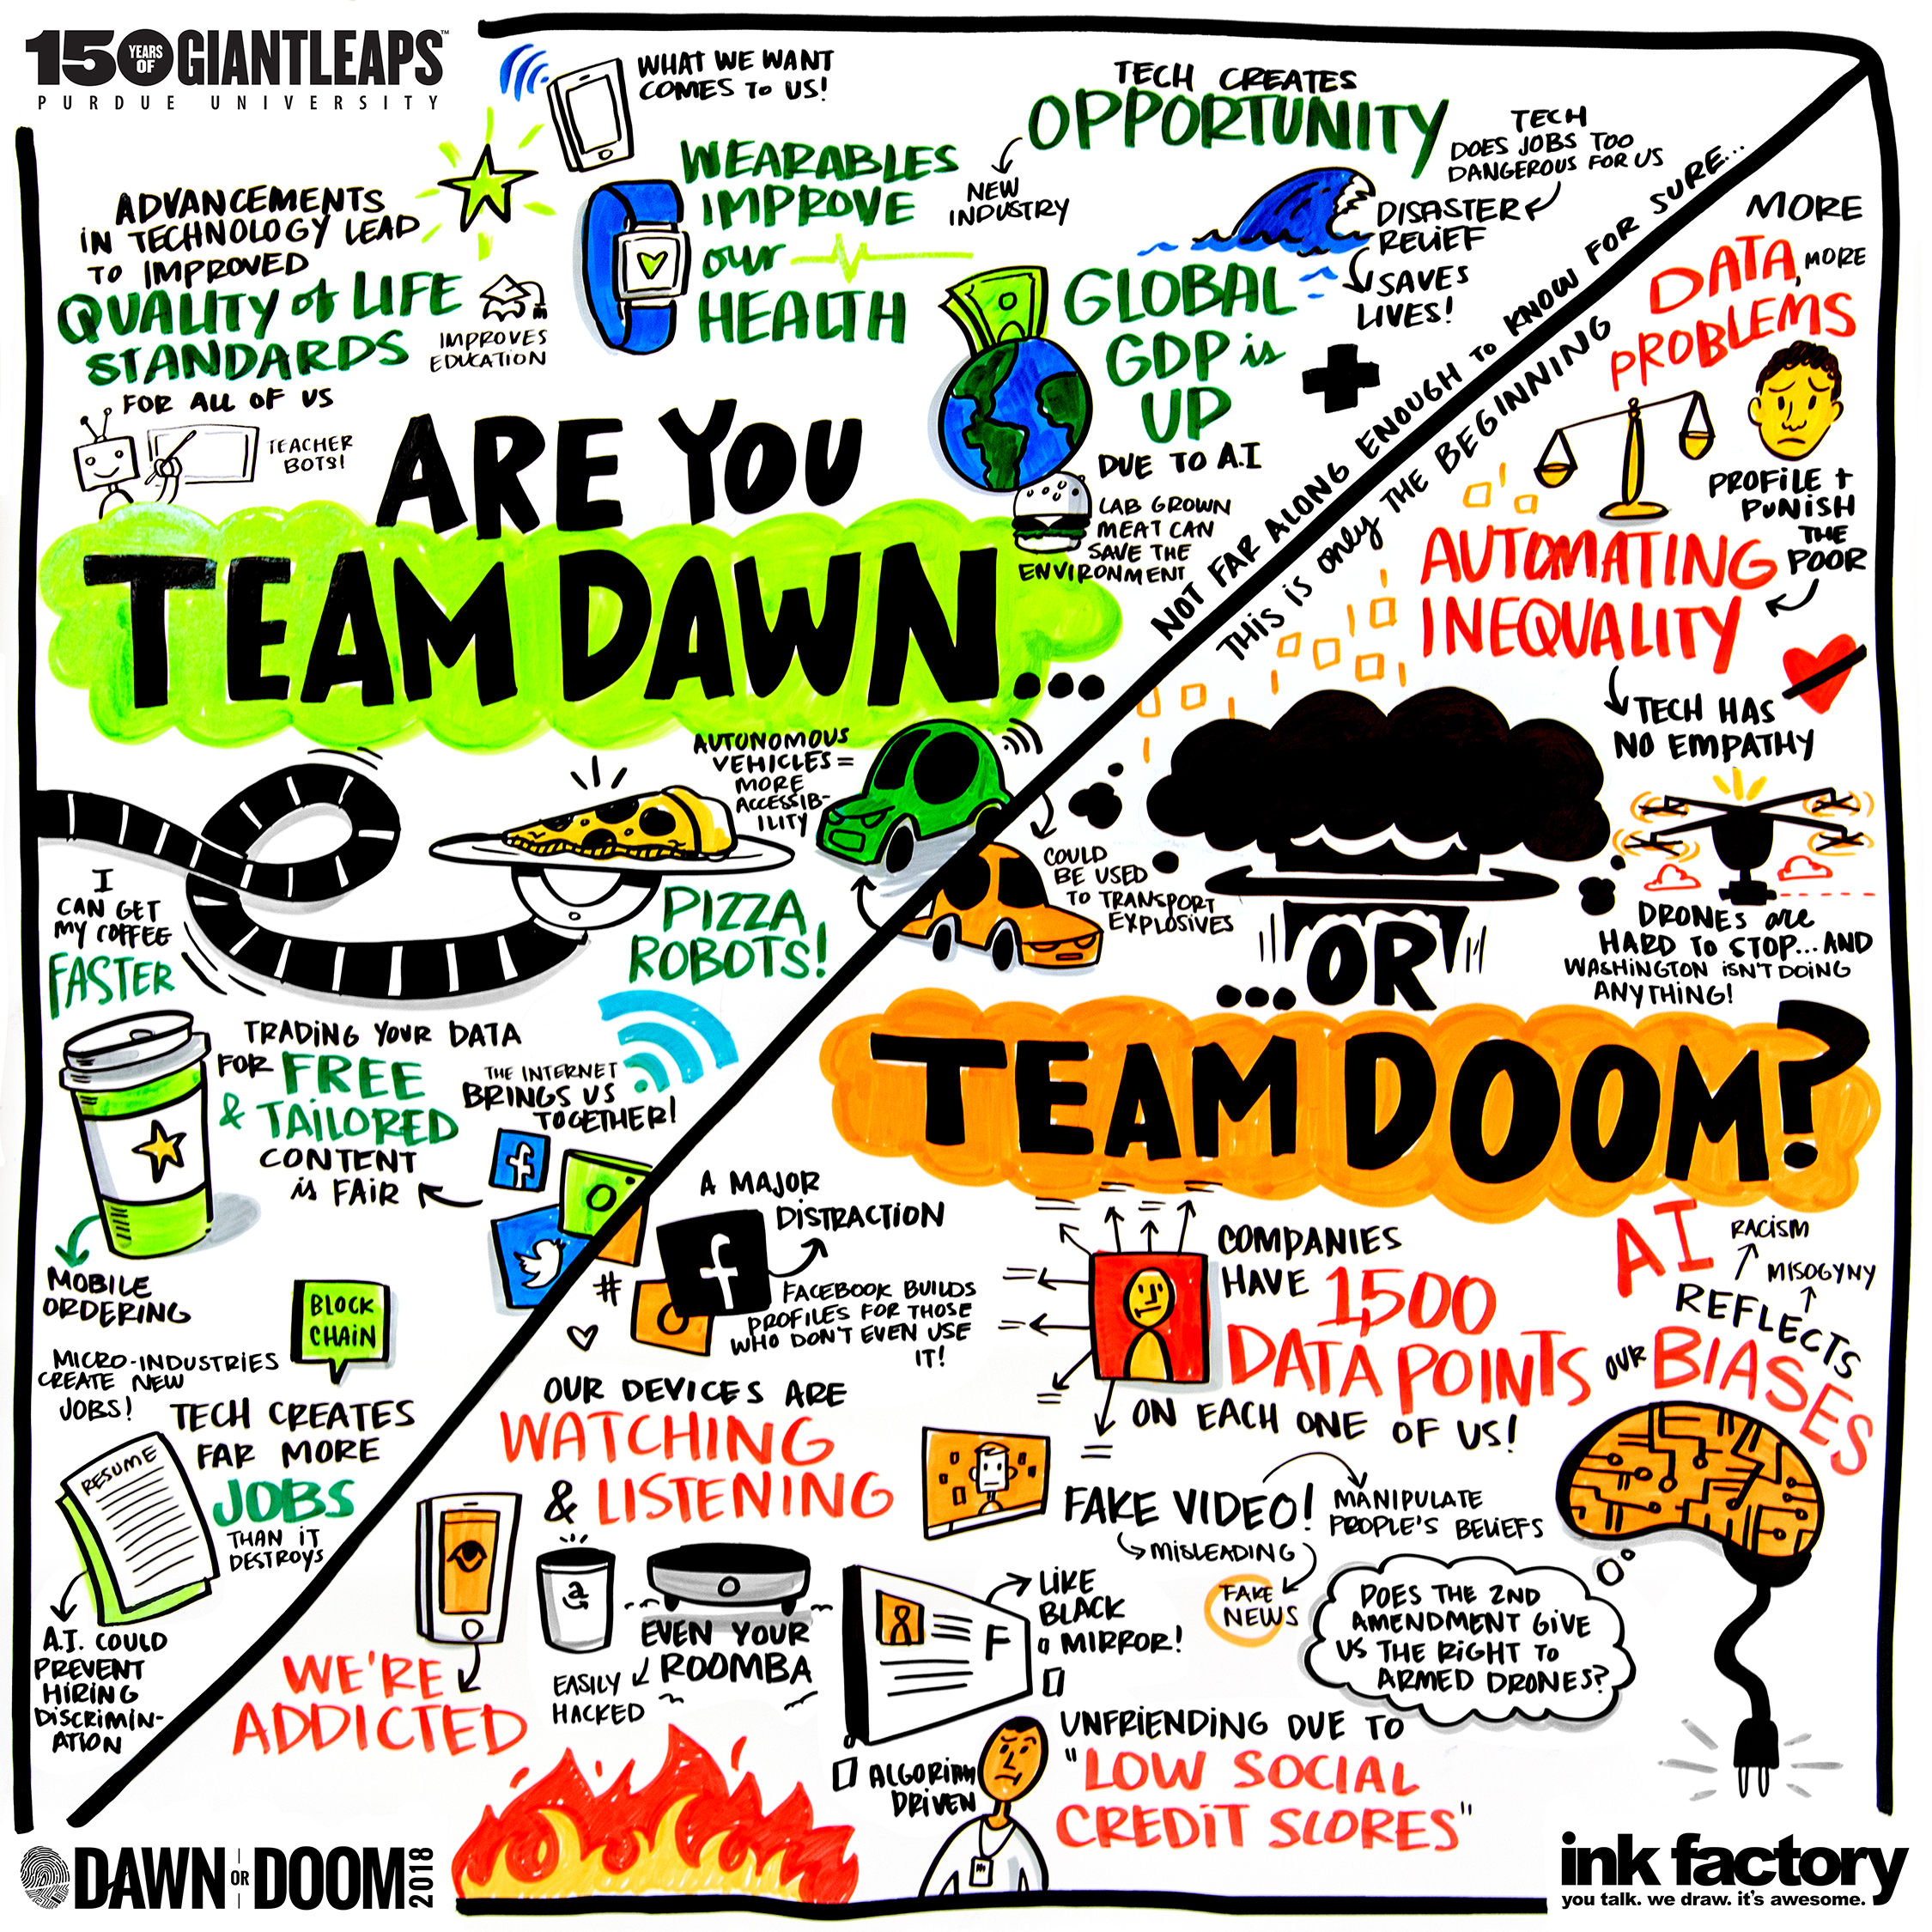 Team Dawn or Team Doom